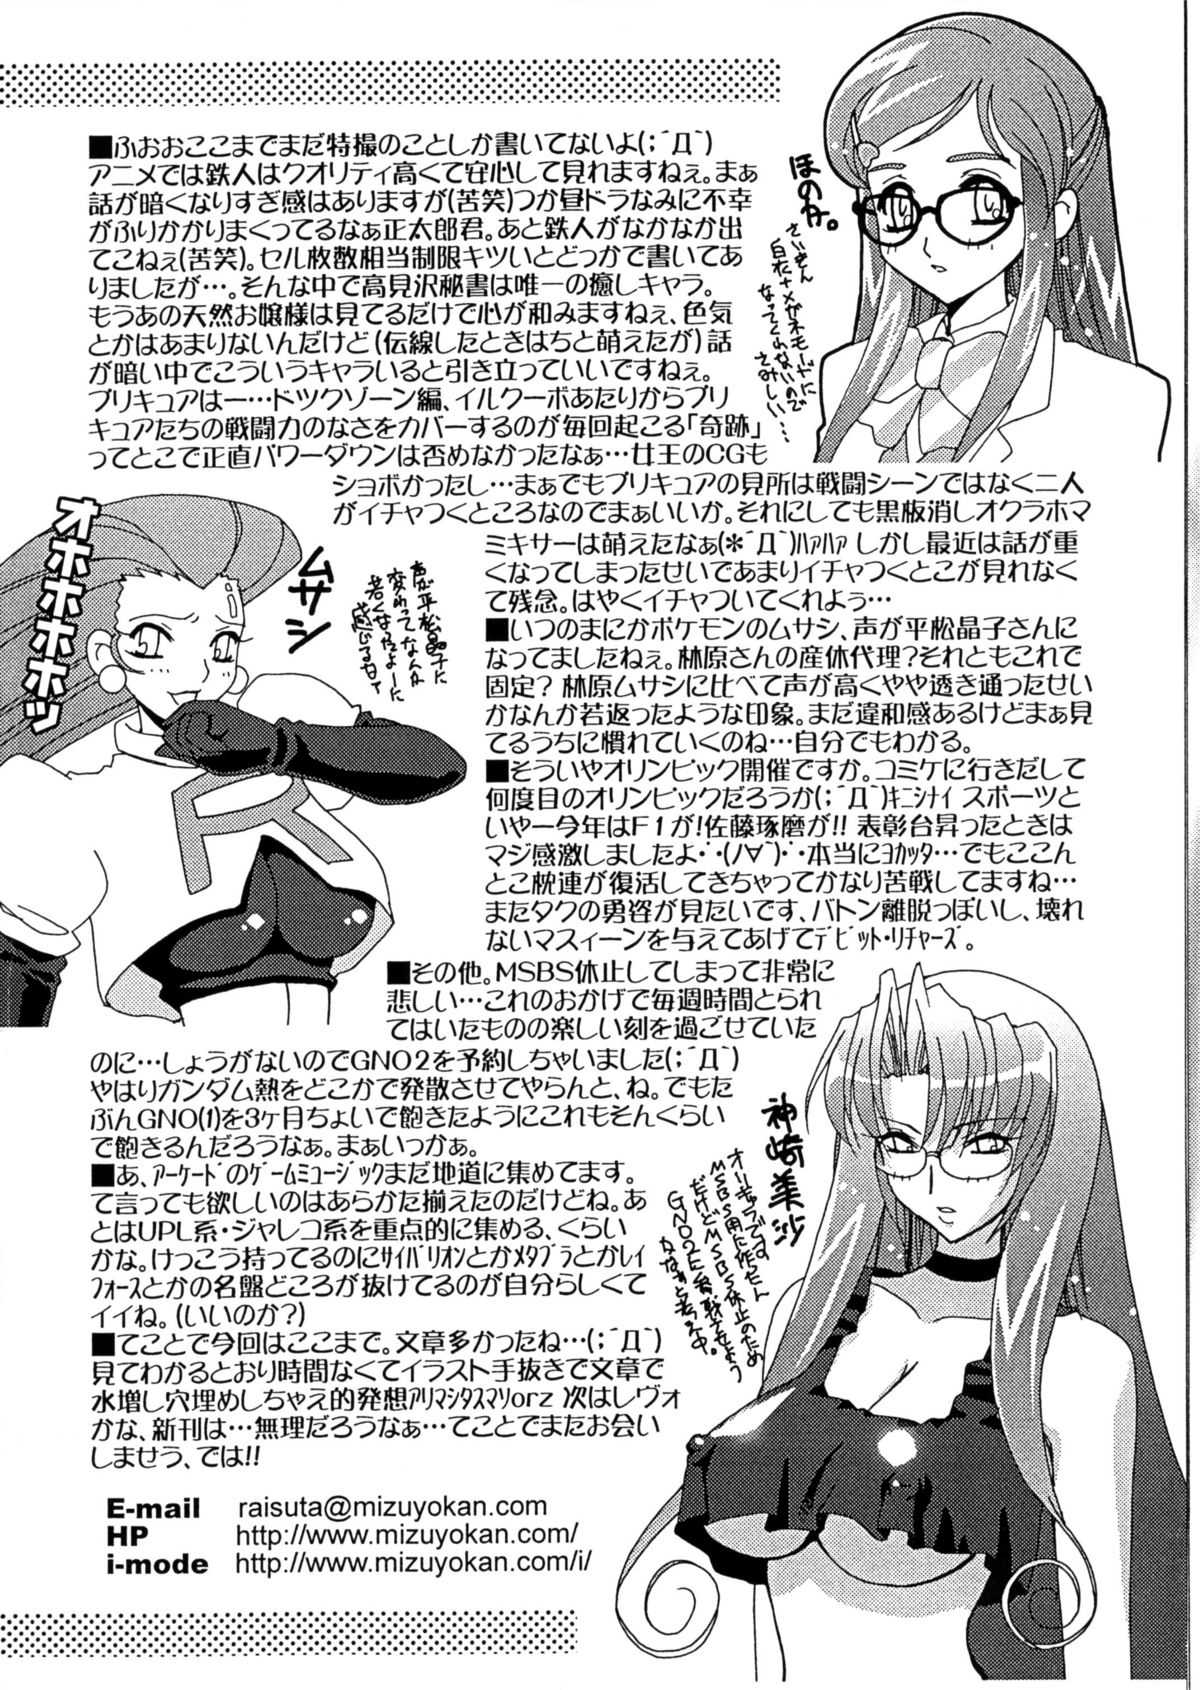 [Mizuyokan Brand] Raisuta News. Vol.111 